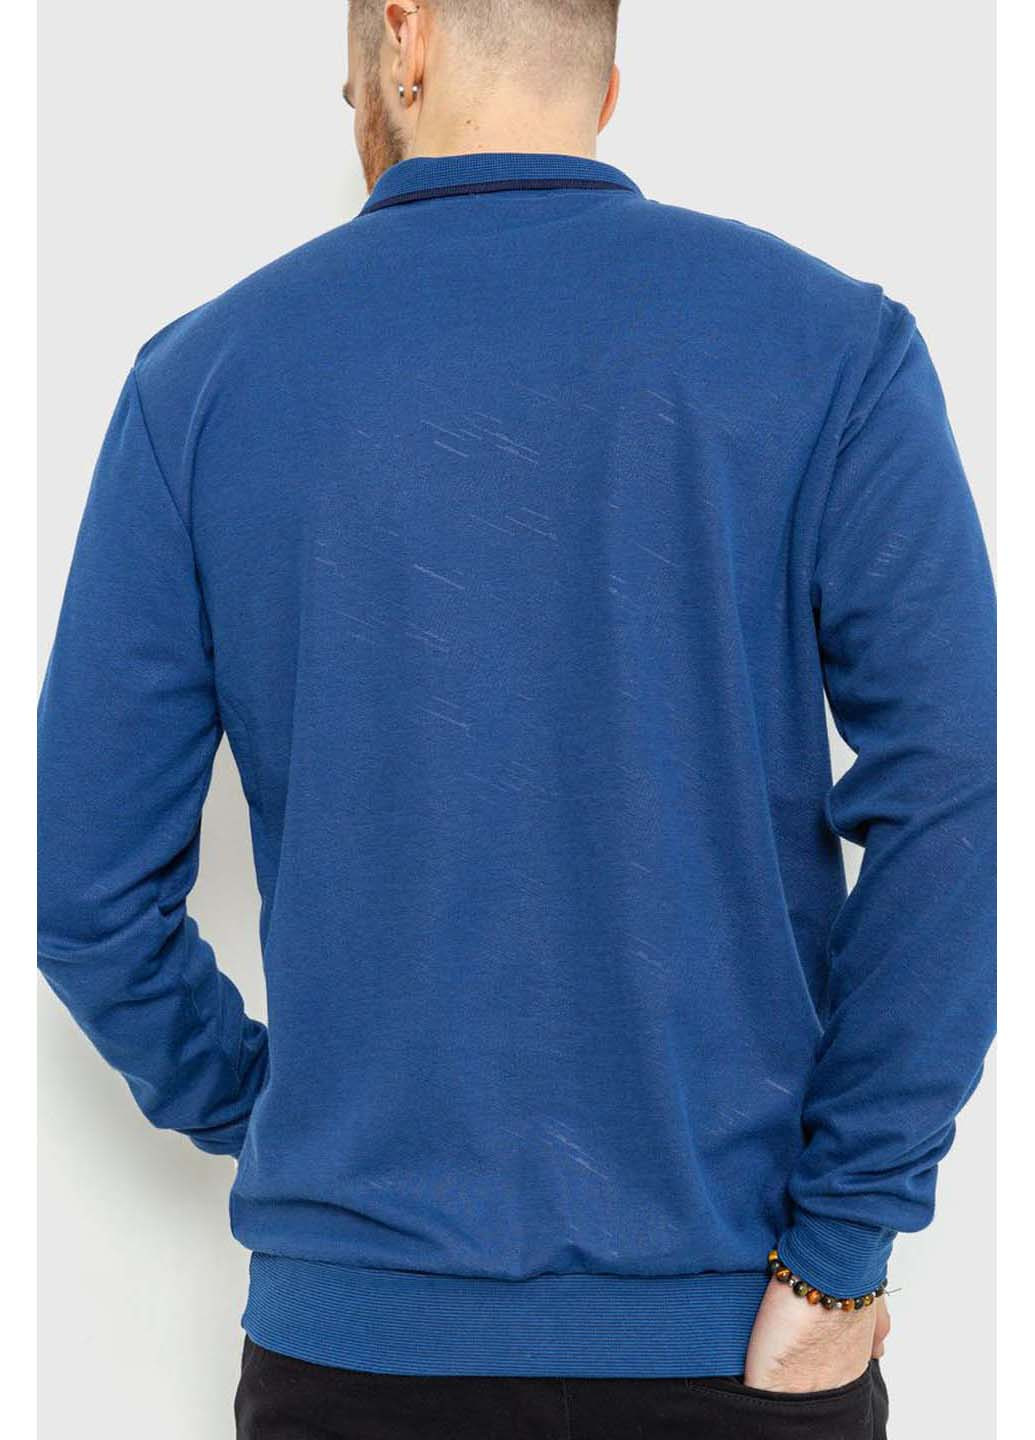 Синяя футболка-поло для мужчин Ager